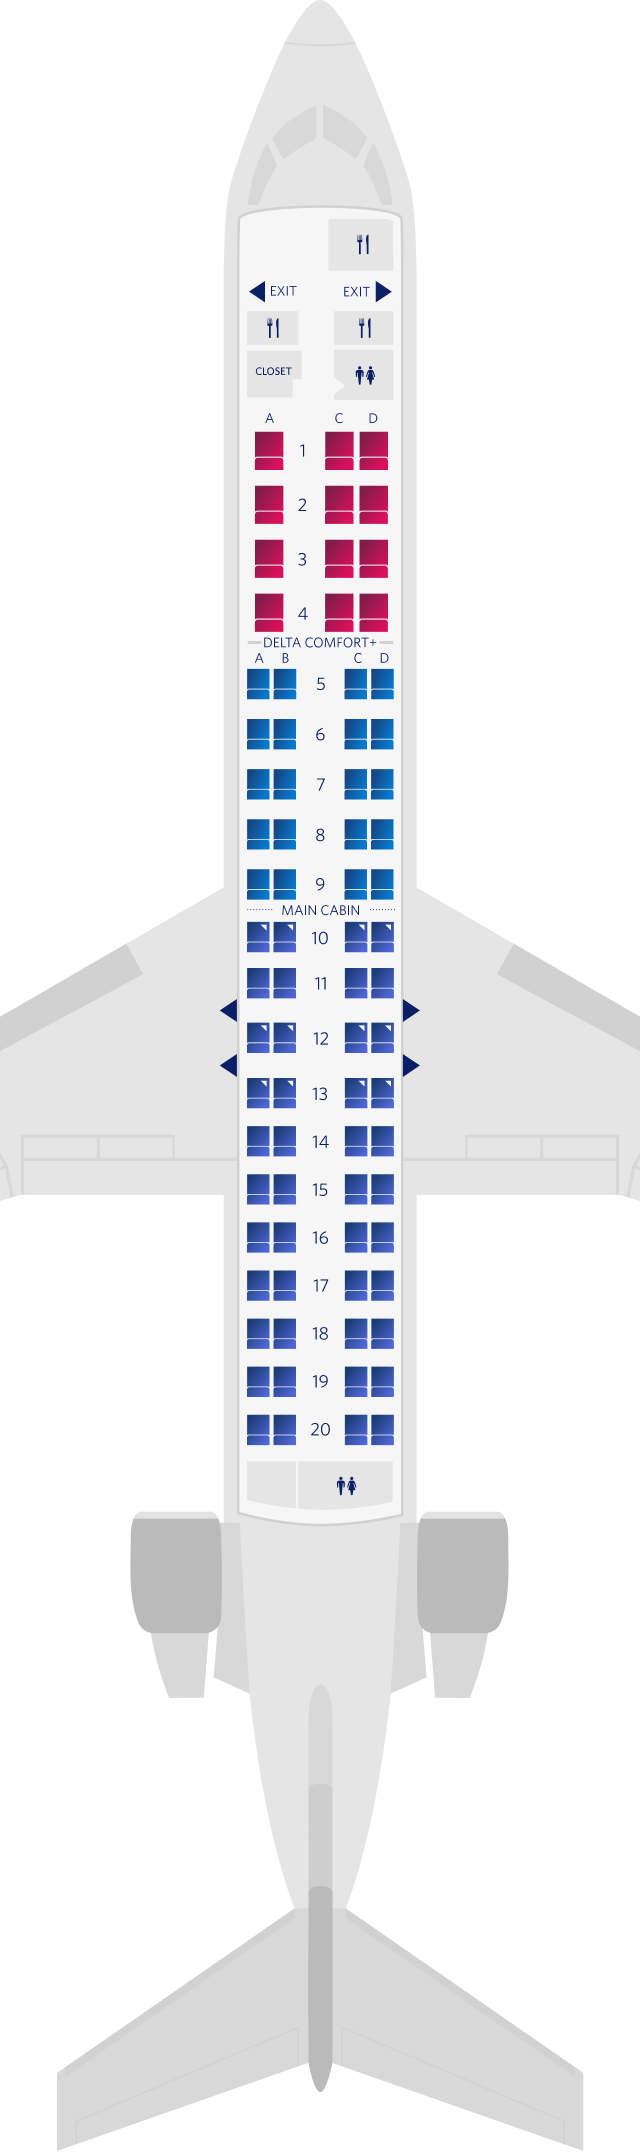 Bombardier CRJ-900-76 Seat Map